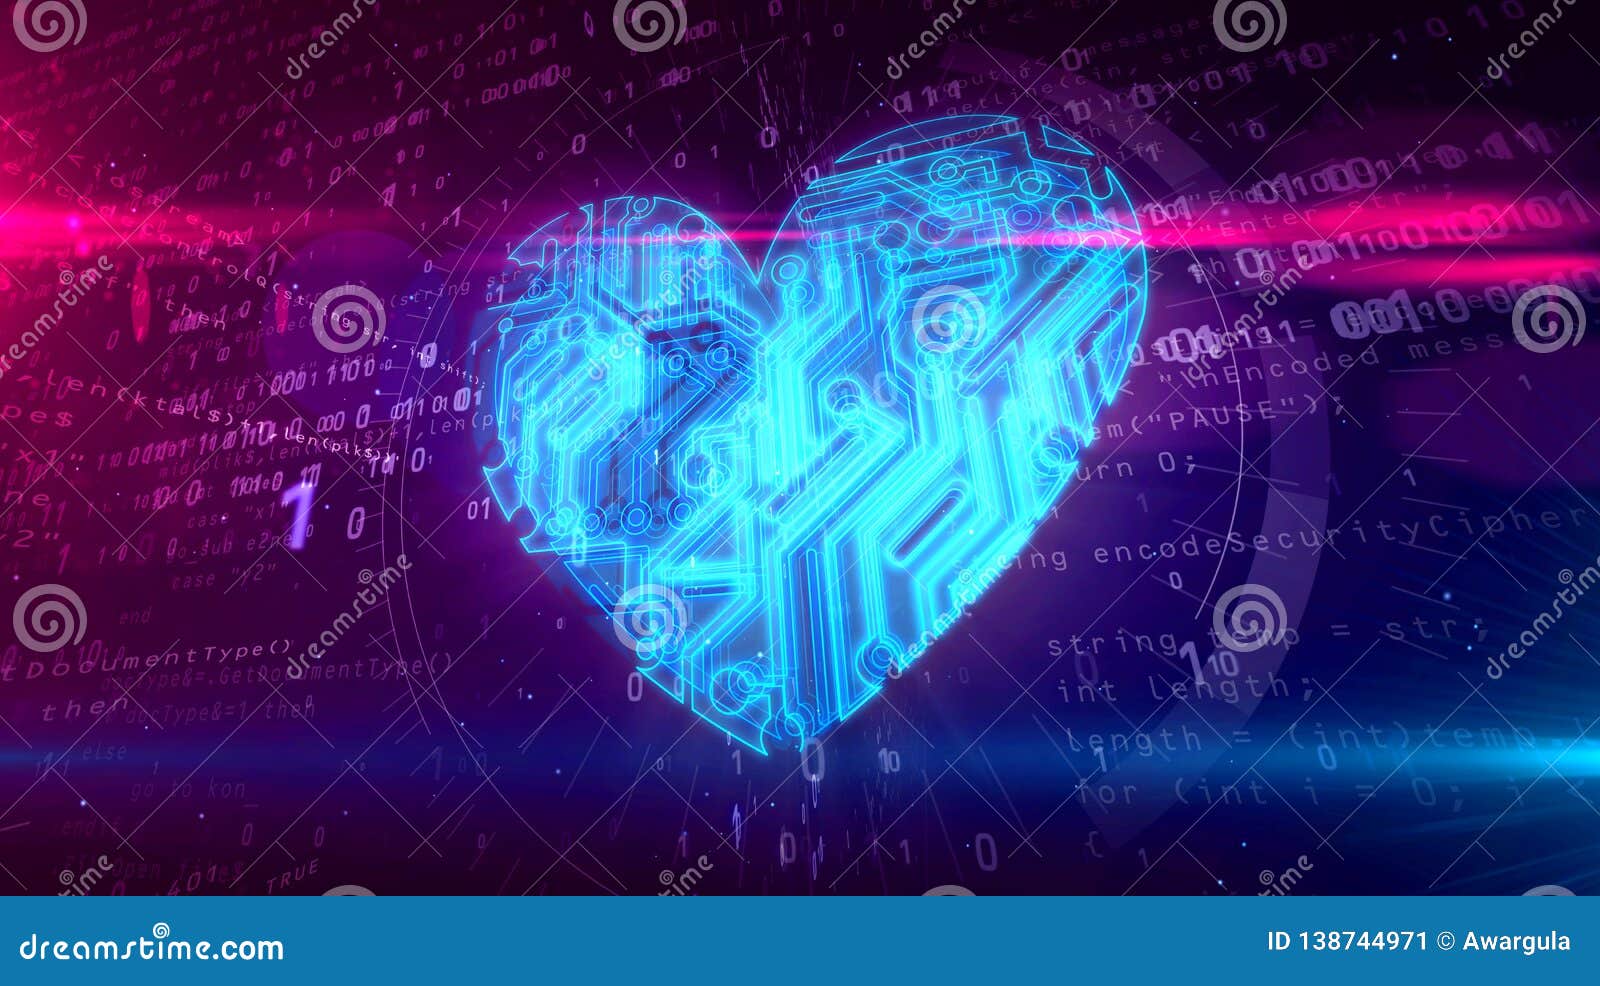 Digital heart